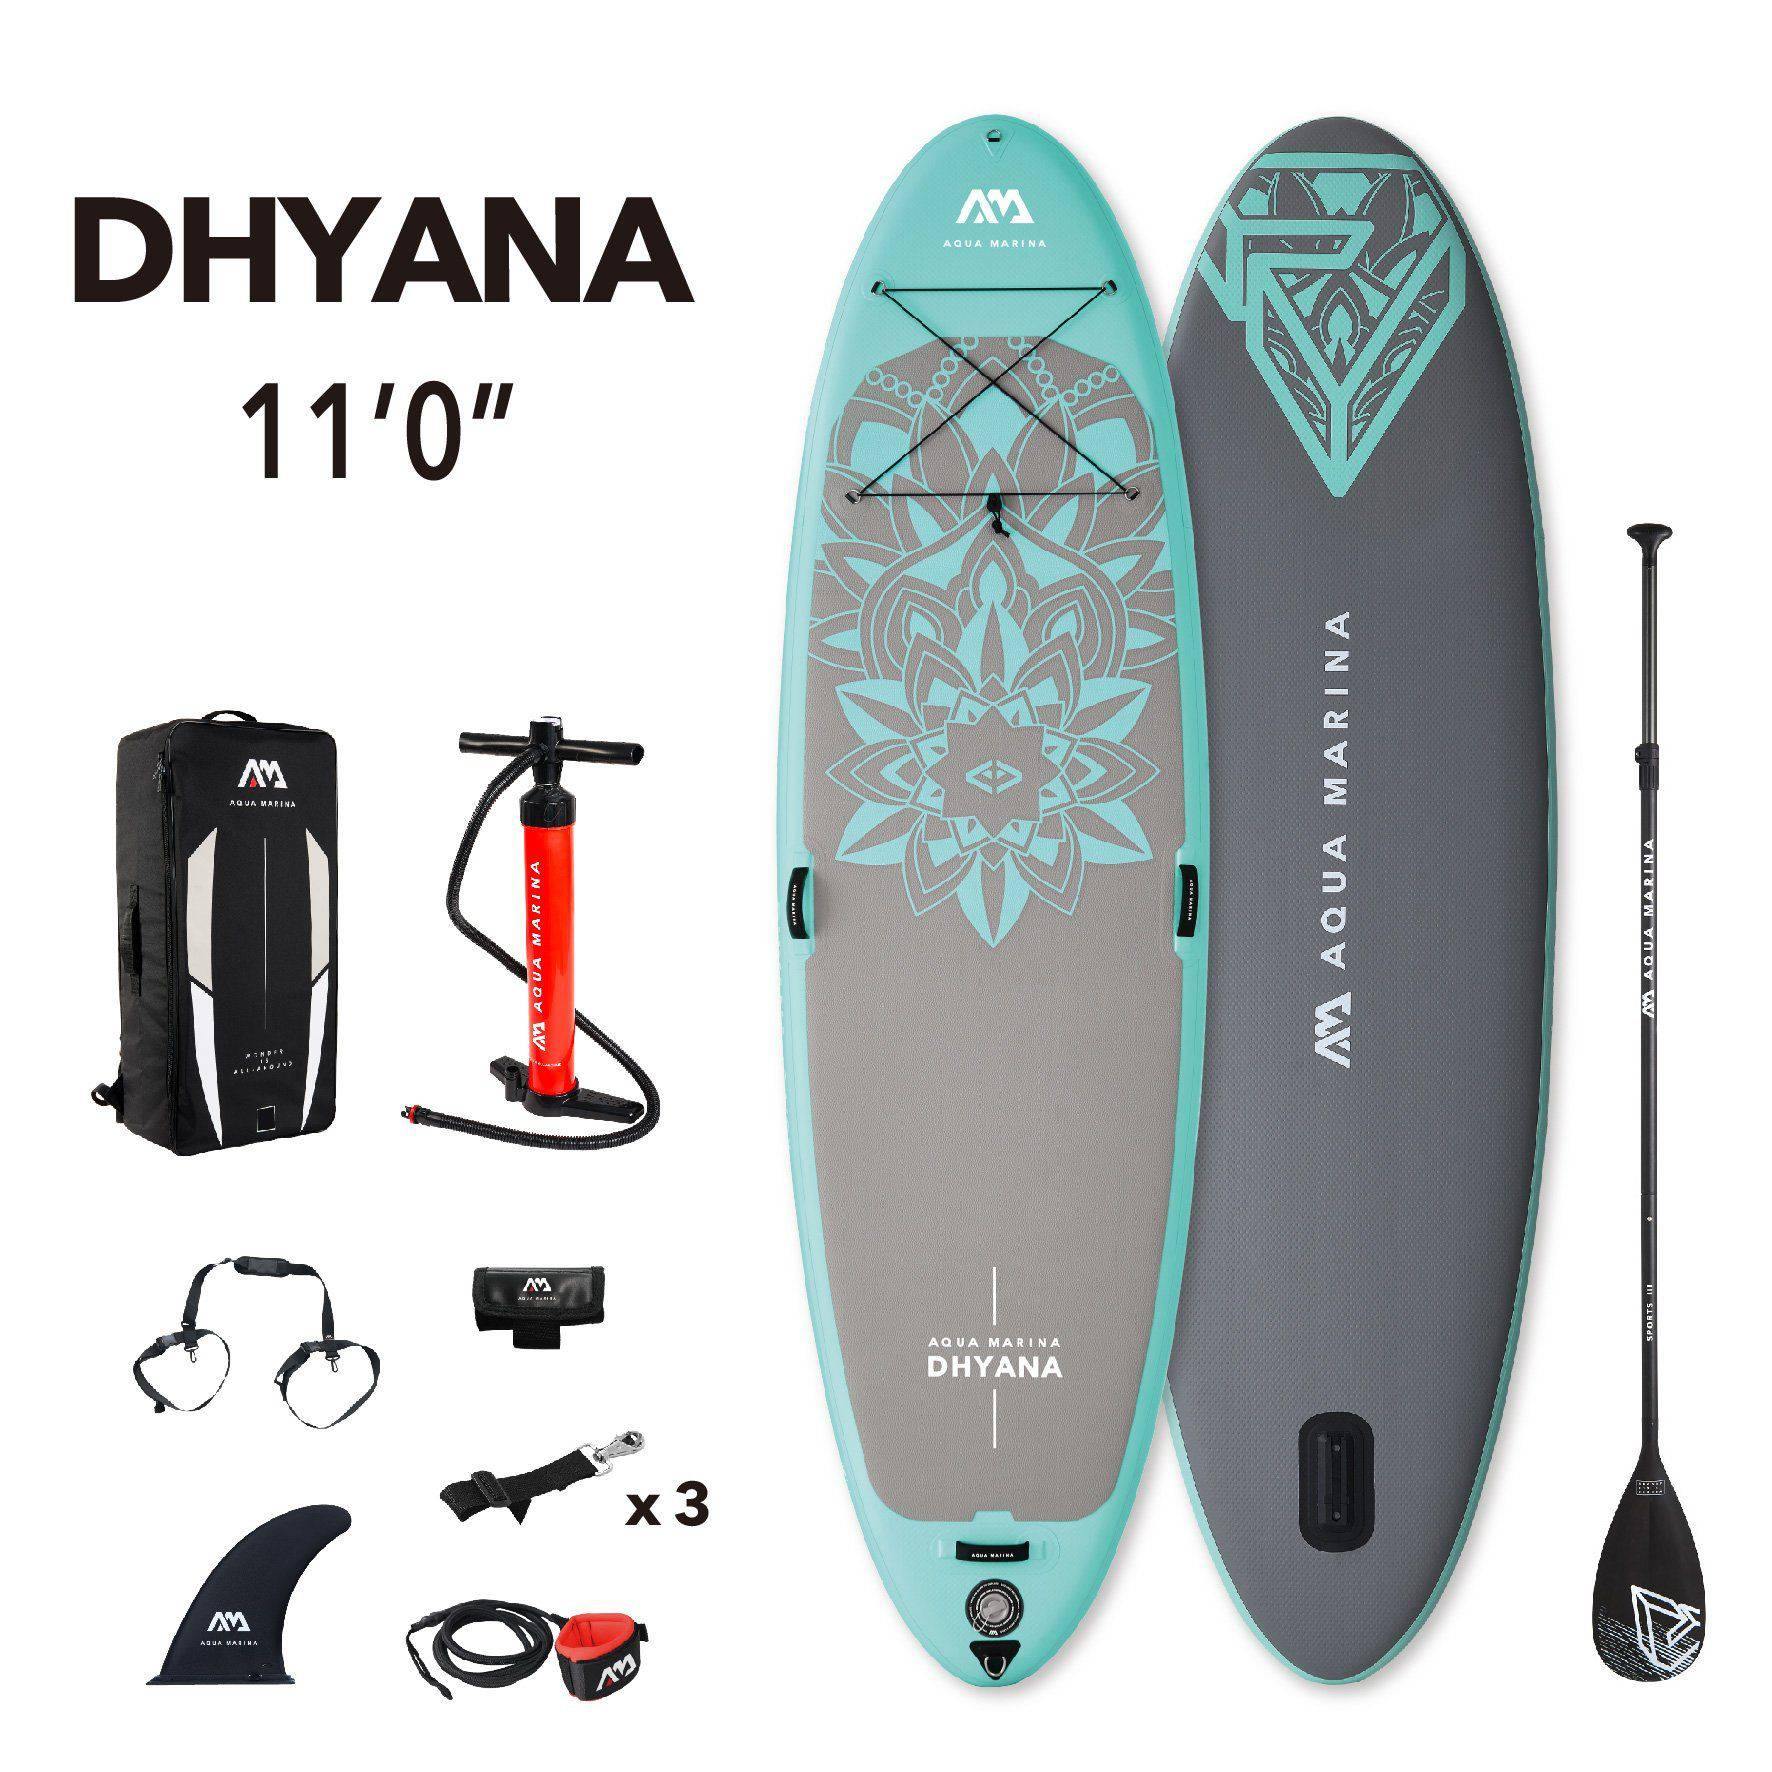 Dhyana Yoga iSUP Paddle Board - DTI Direct USA